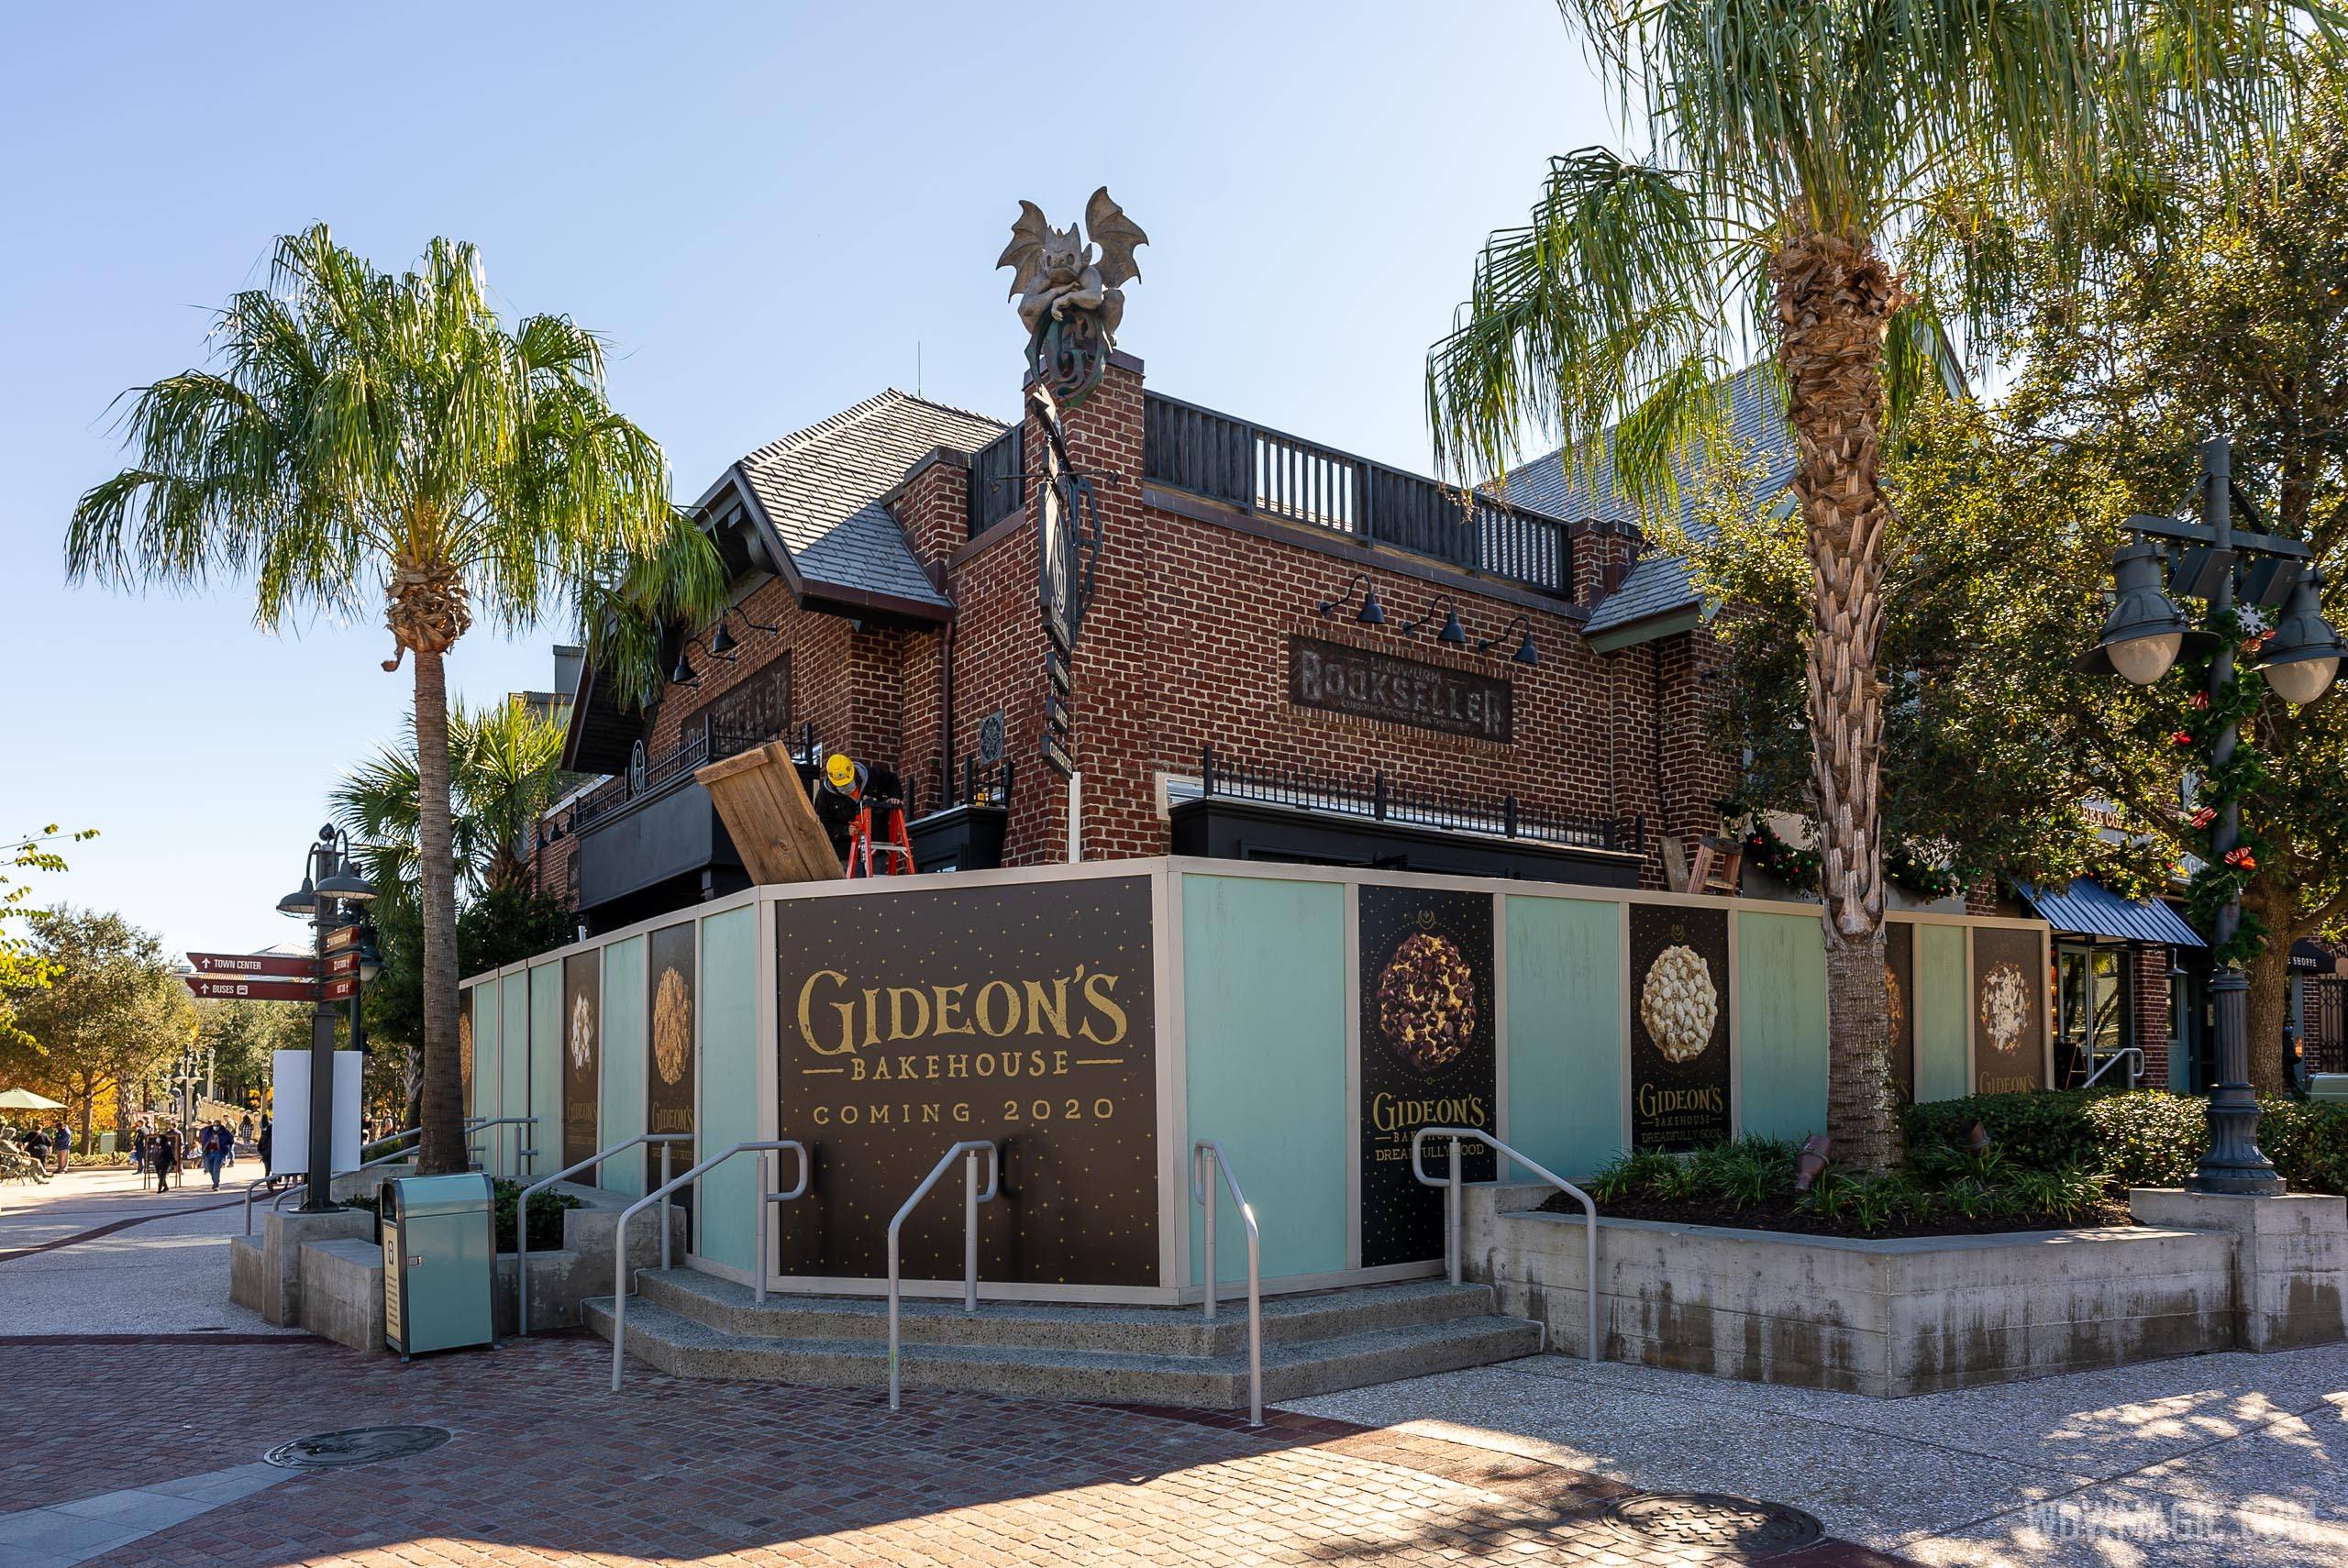 PHOTOS - Gargoyle sits atop Gideon's Bakehouse at Disney Springs as opening nears